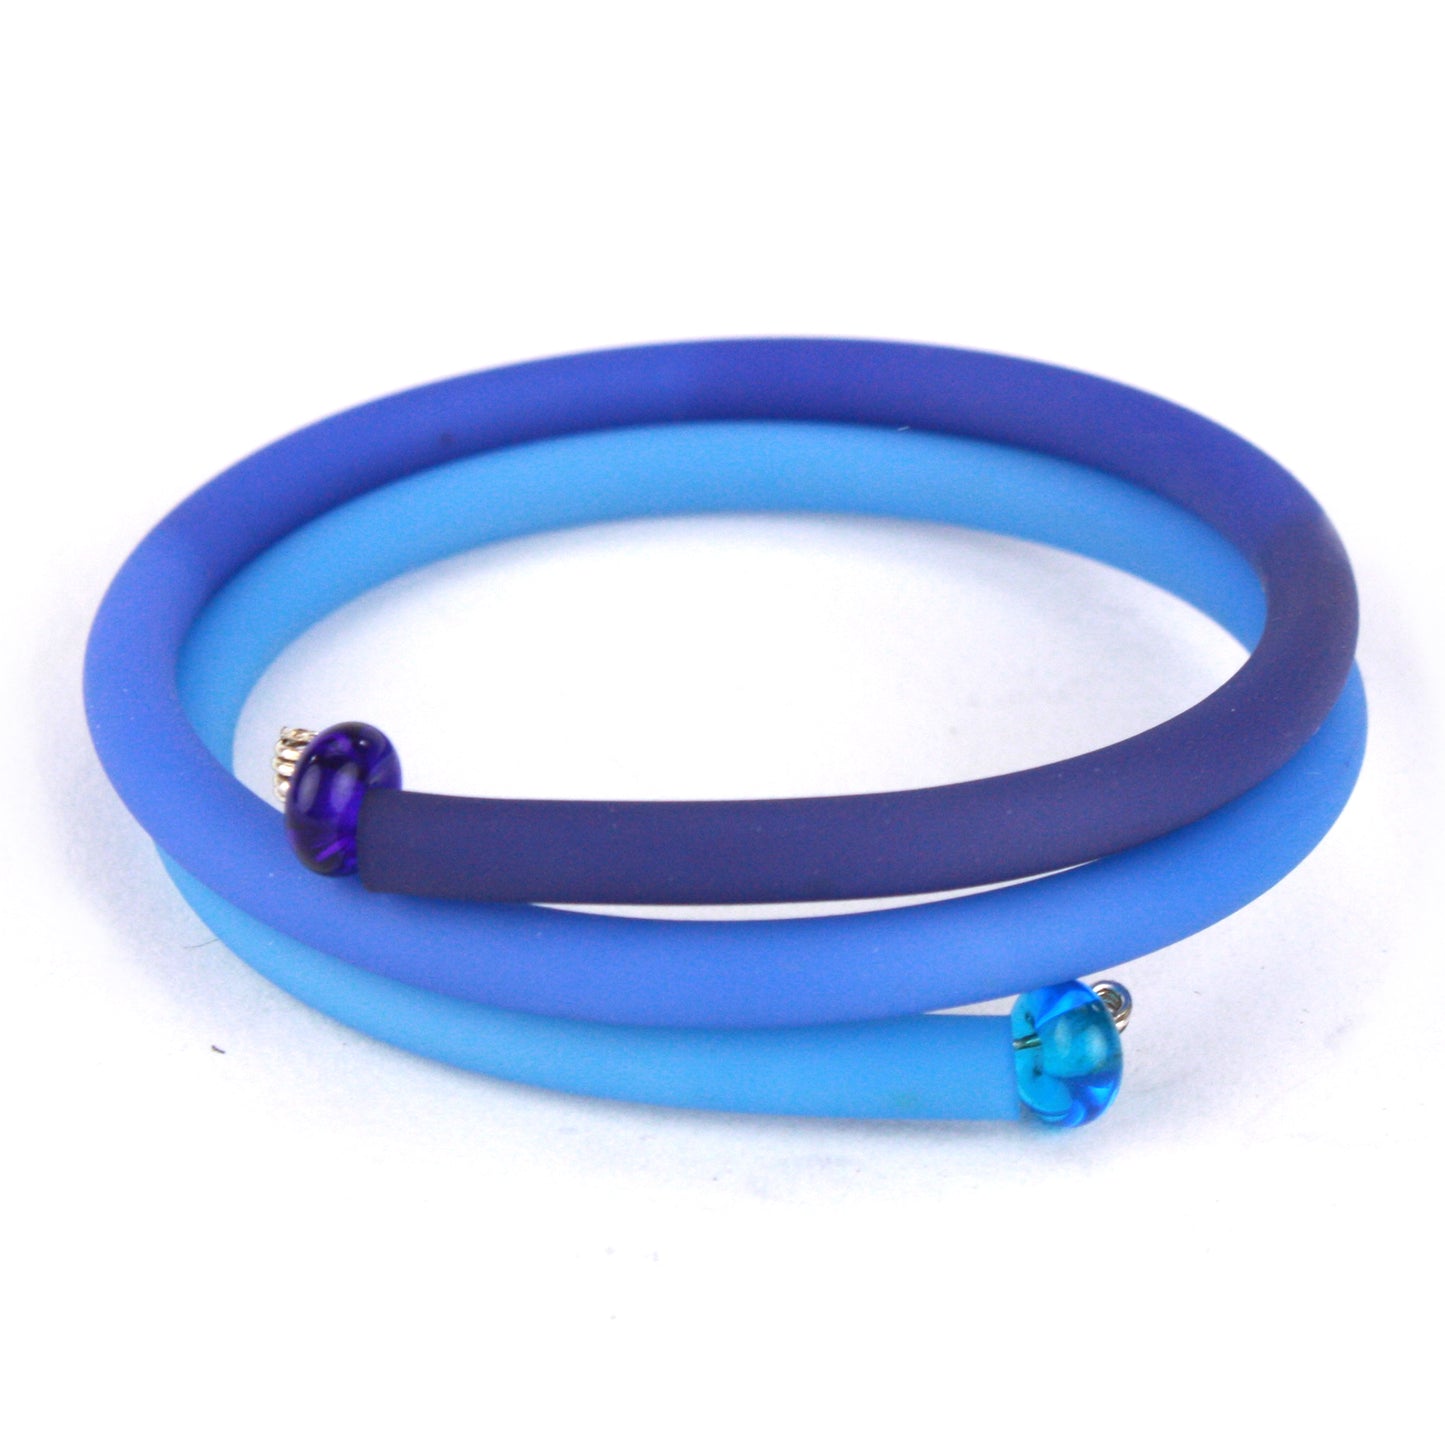 Double wrap bracelet - medium blue to dark blue